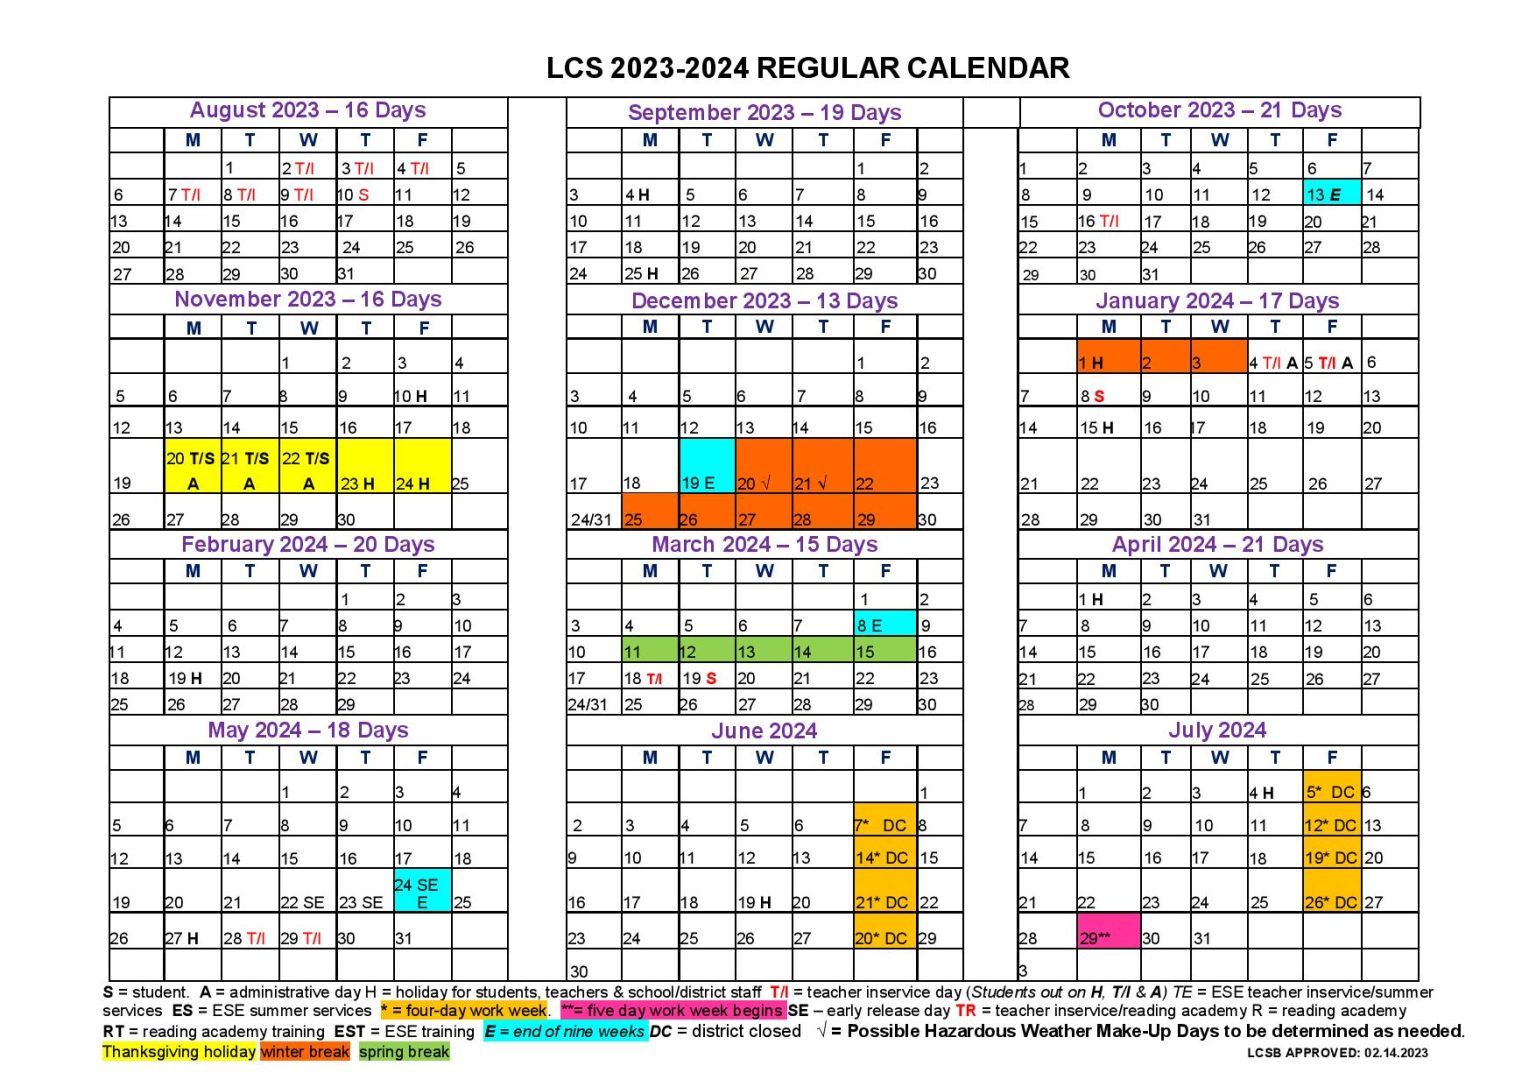 leon-county-school-calendar-2023-2024-holiday-breaks